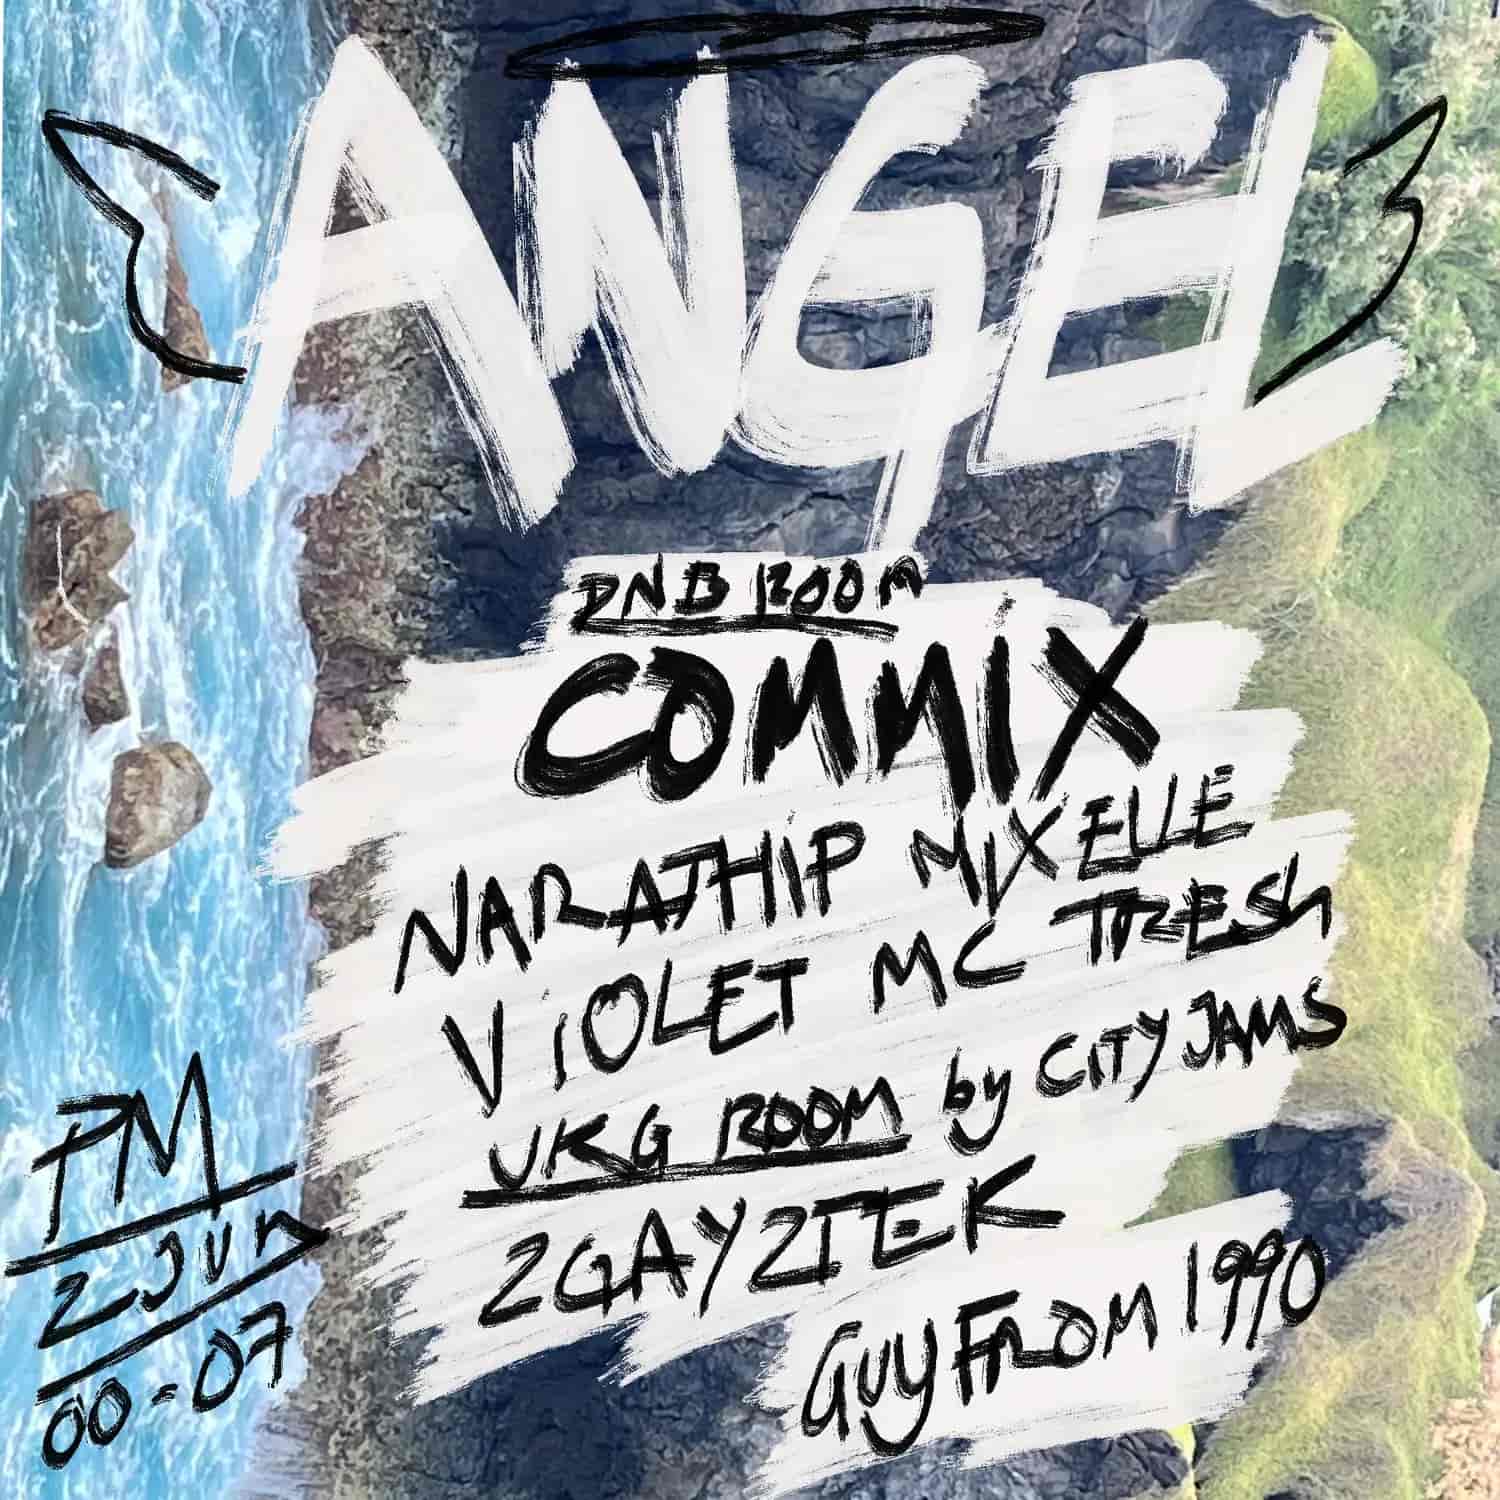 ANGEL with Commix, Narathip, Mix'Elle, Violet, MC Tresh & City Jamz